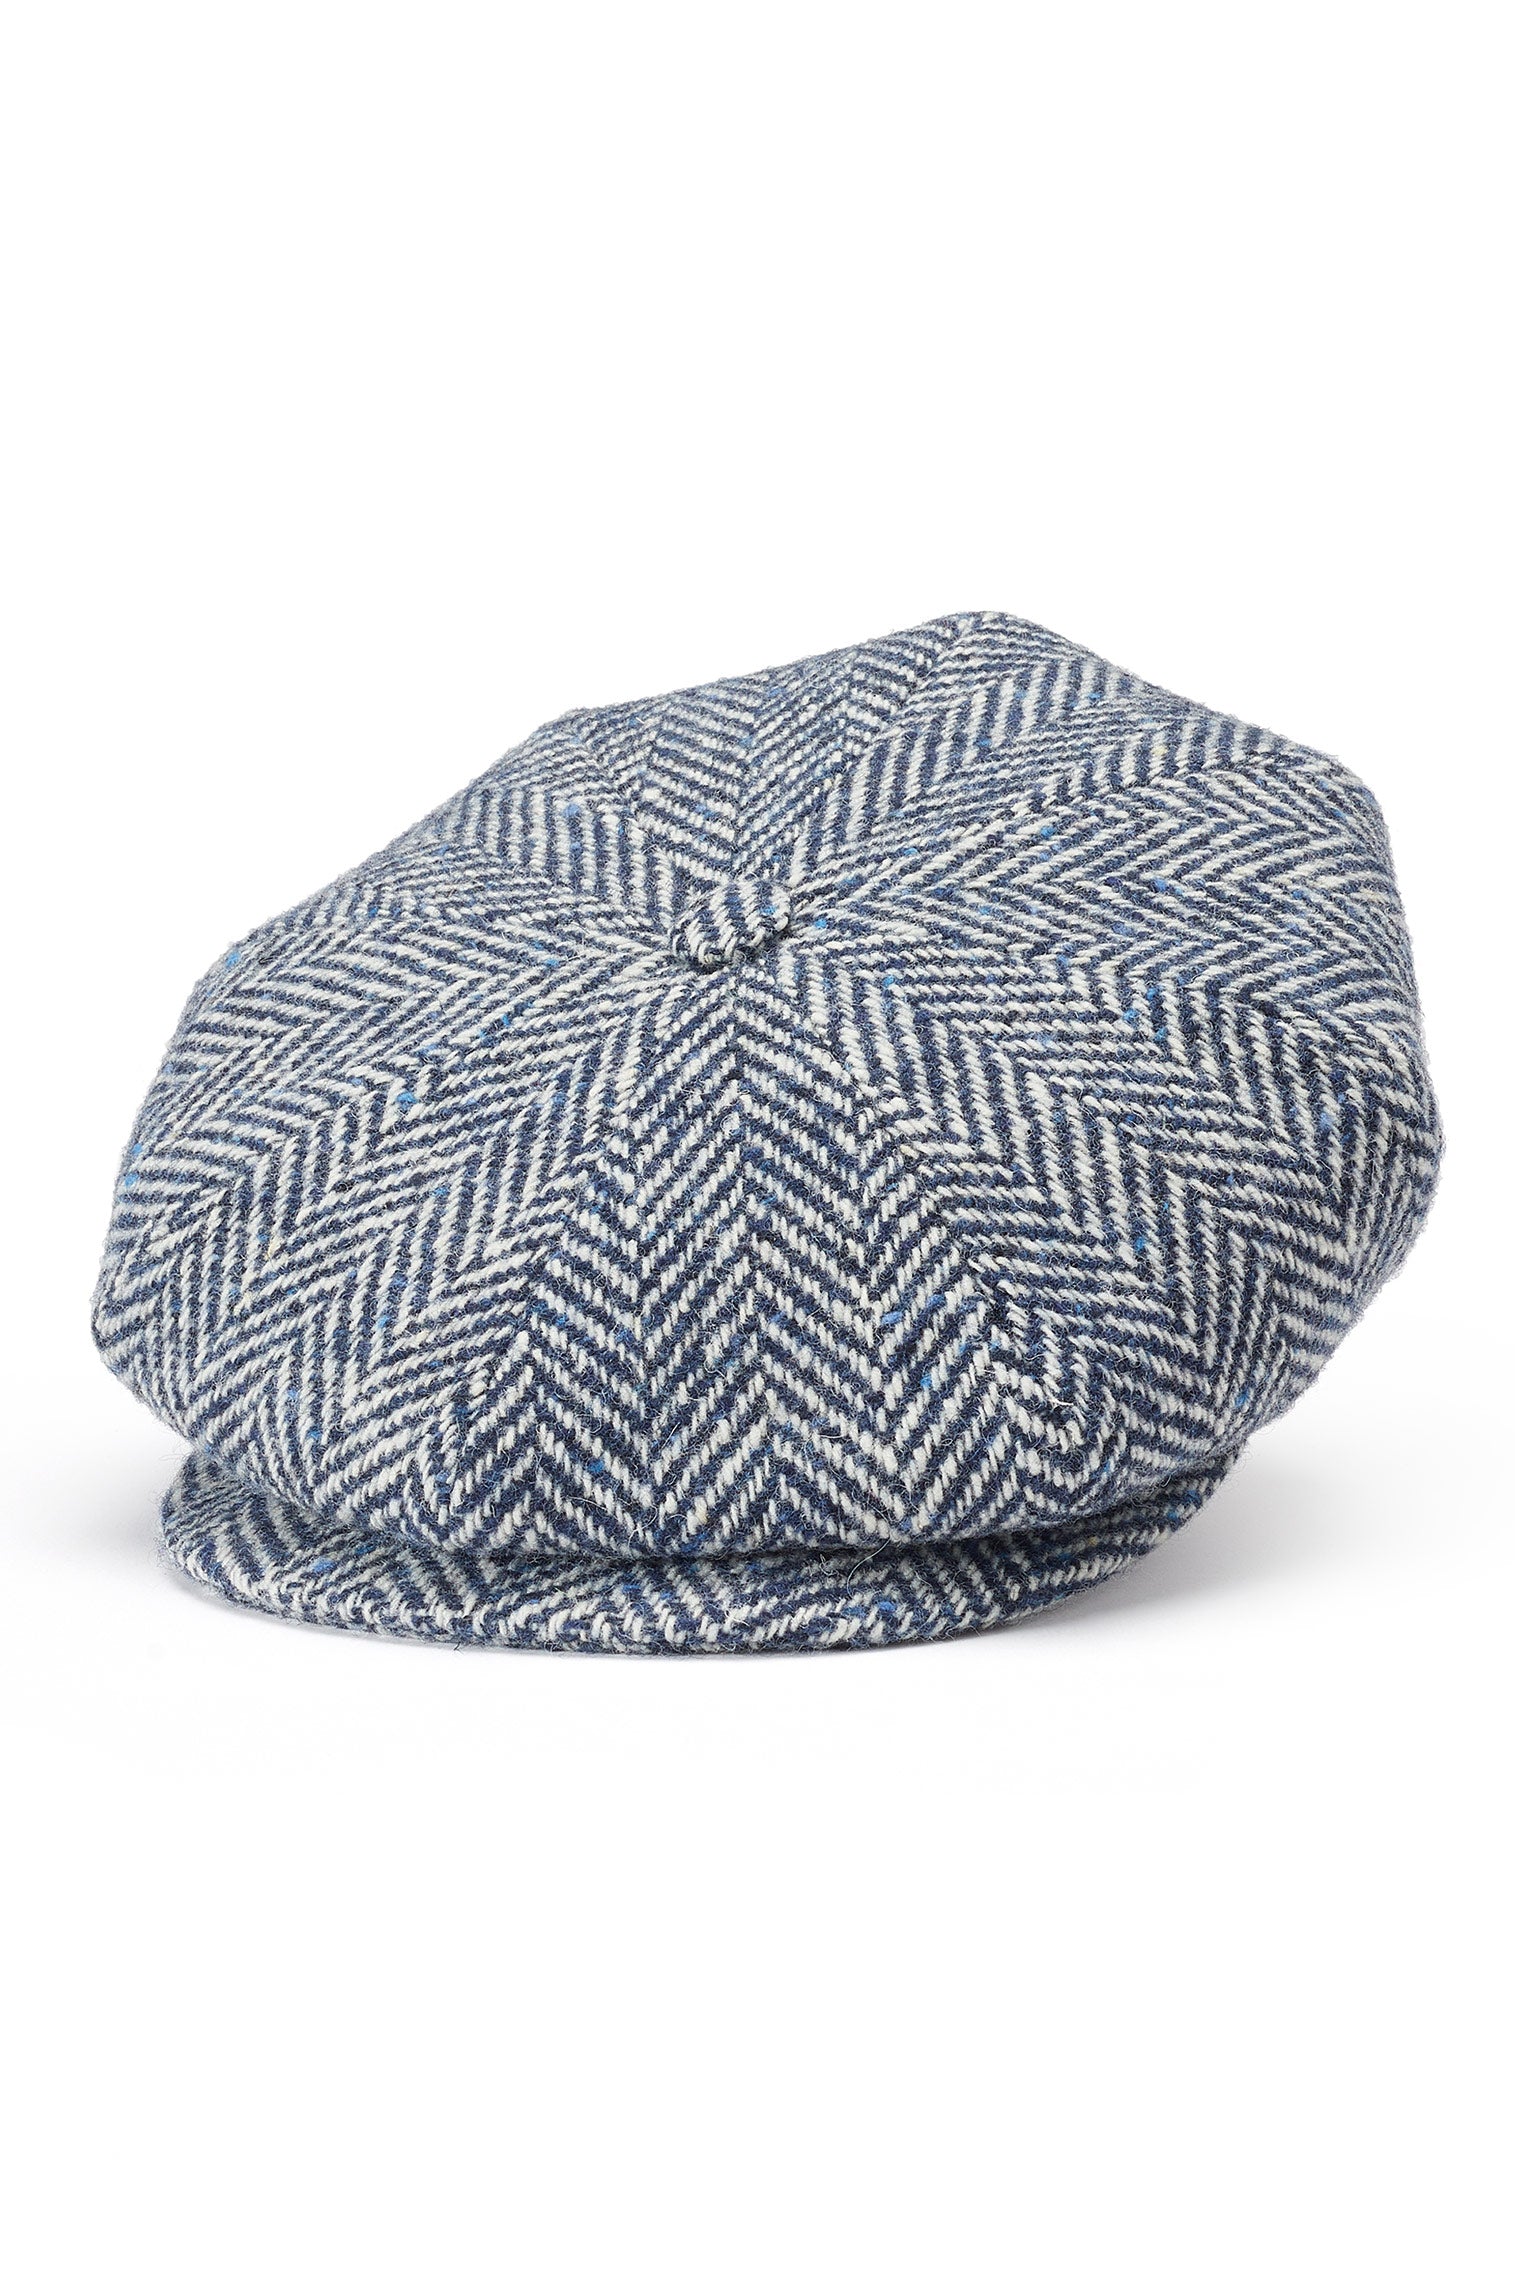 Muirfield Herringbone Bakerboy Cap - Hats for Square Face Shapes - Lock & Co. Hatters London UK